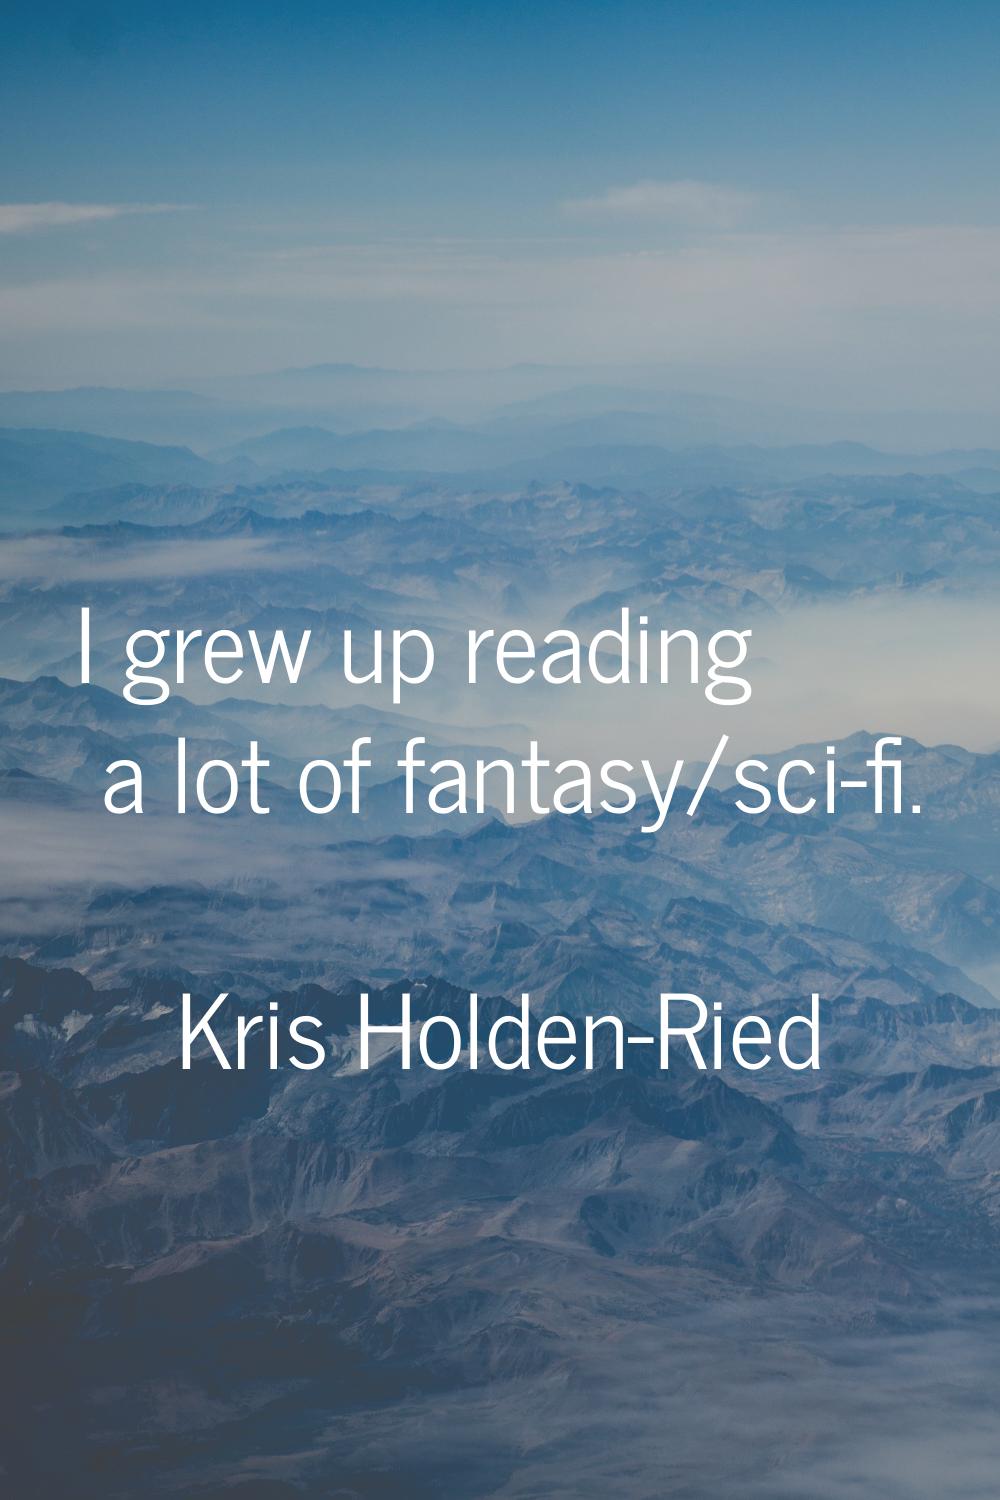 I grew up reading a lot of fantasy/sci-fi.